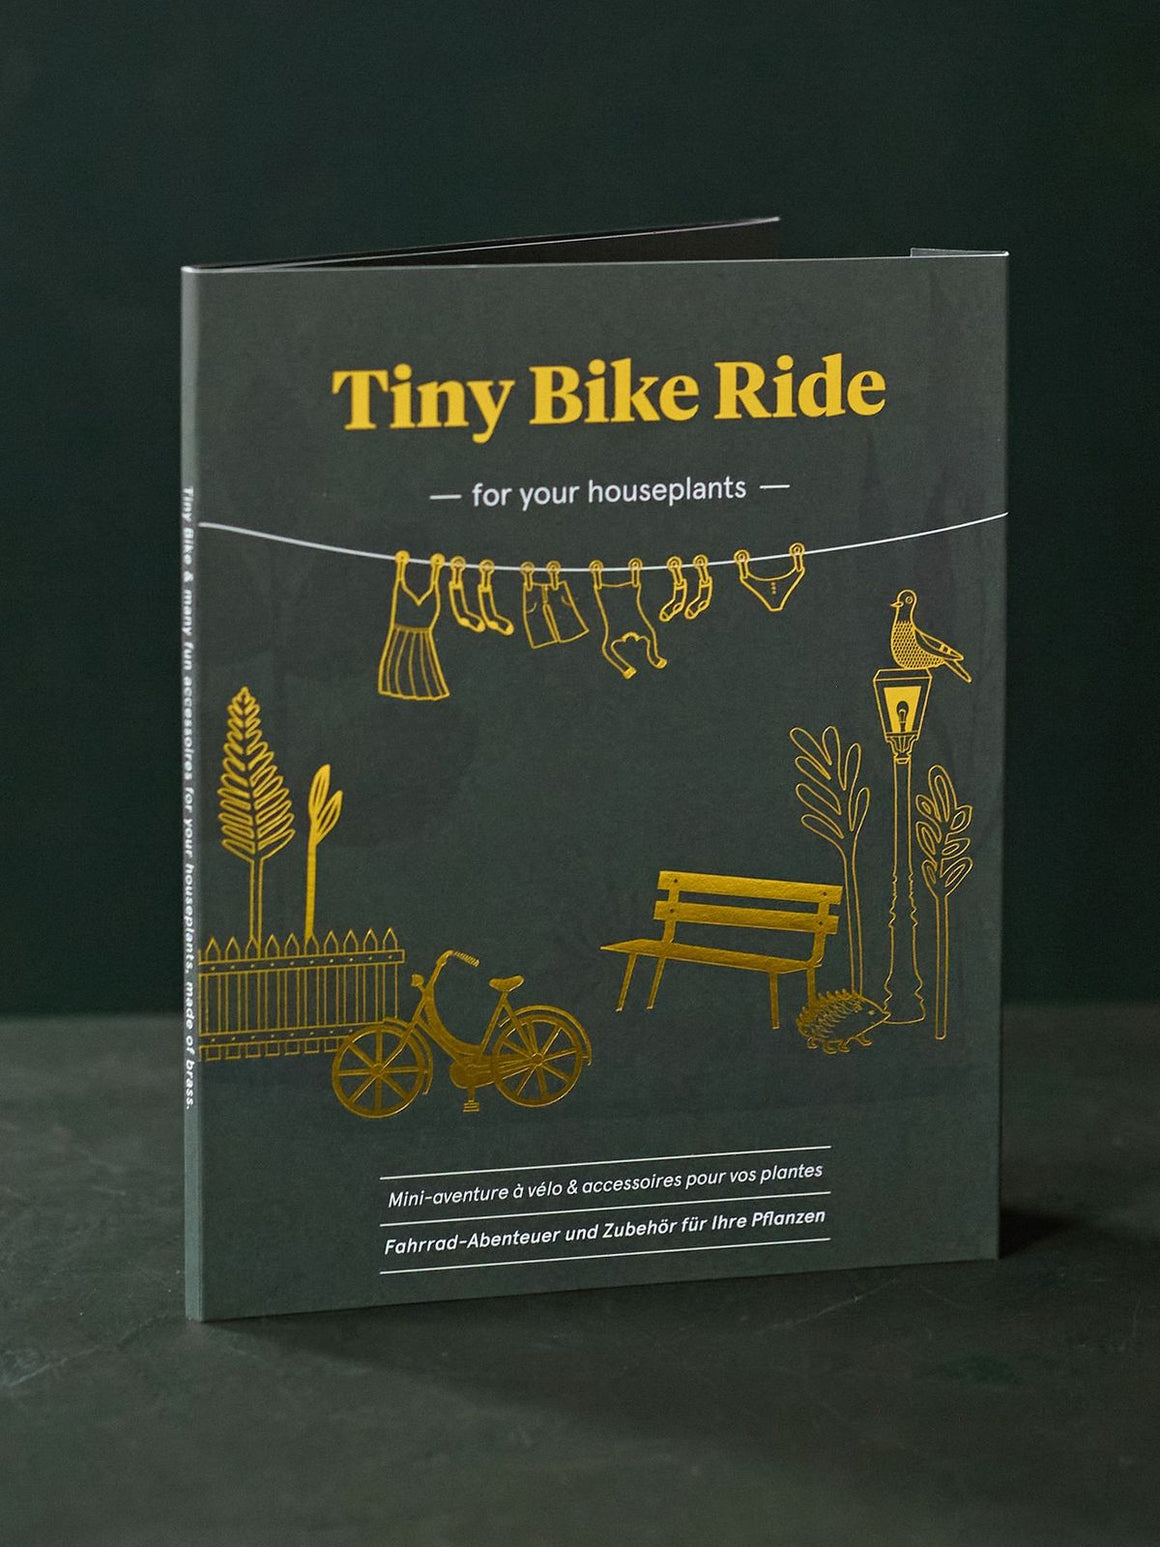 Tiny Bike Ride